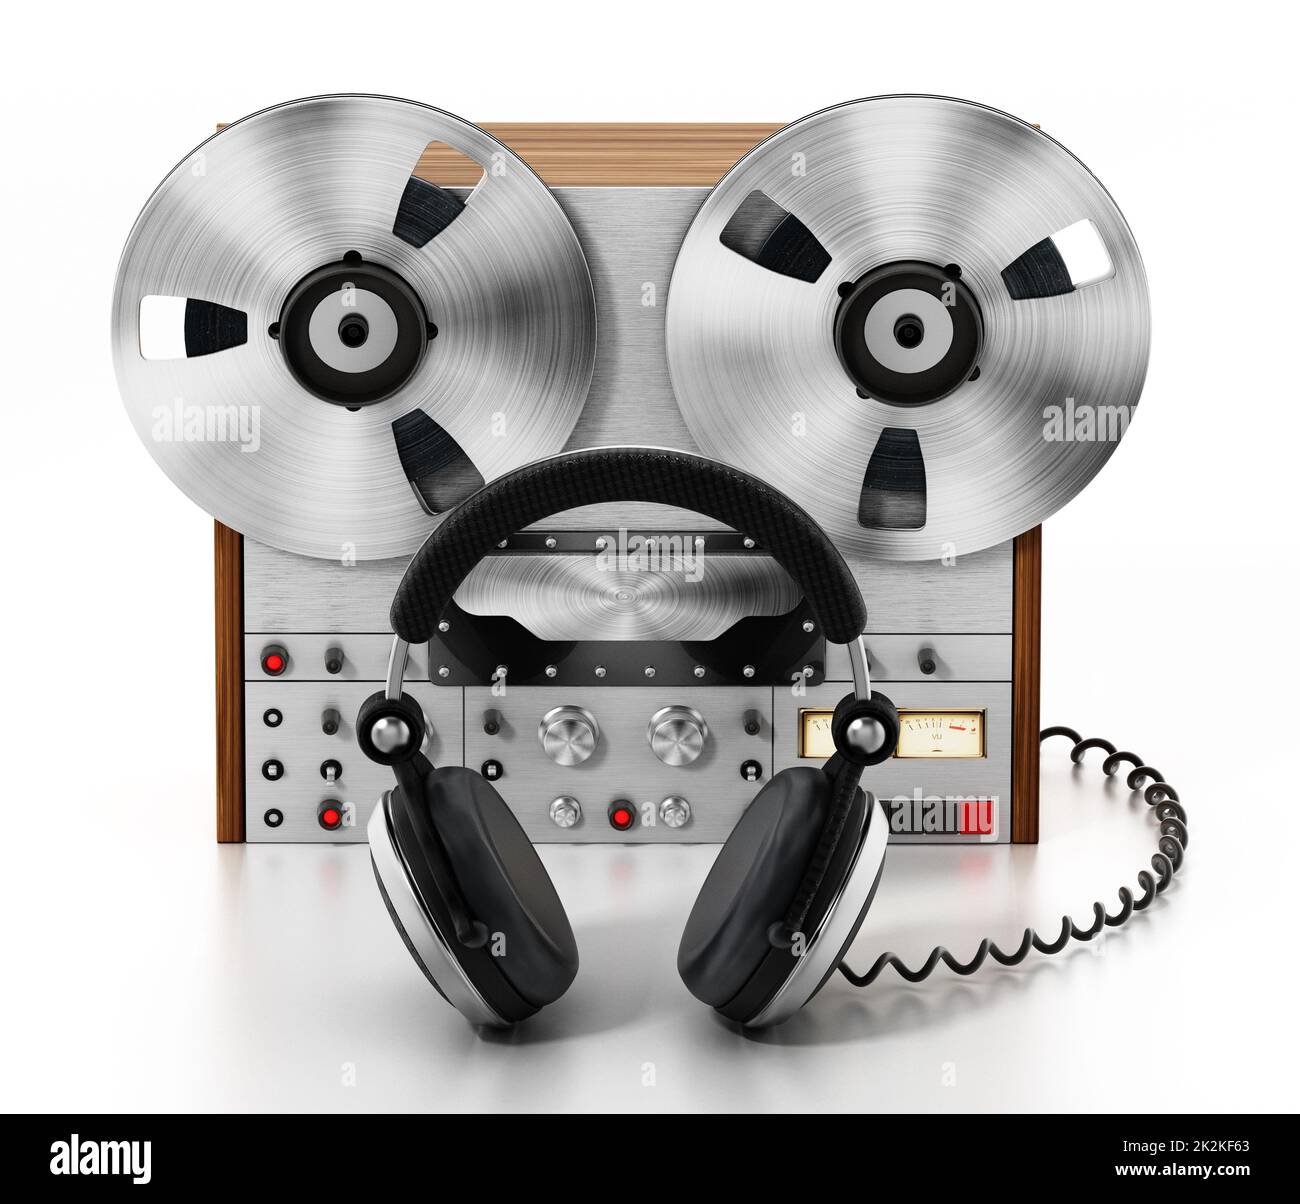 https://c8.alamy.com/comp/2K2KF63/recording-machine-and-headphones-isolated-on-white-background-3d-illustration-2K2KF63.jpg